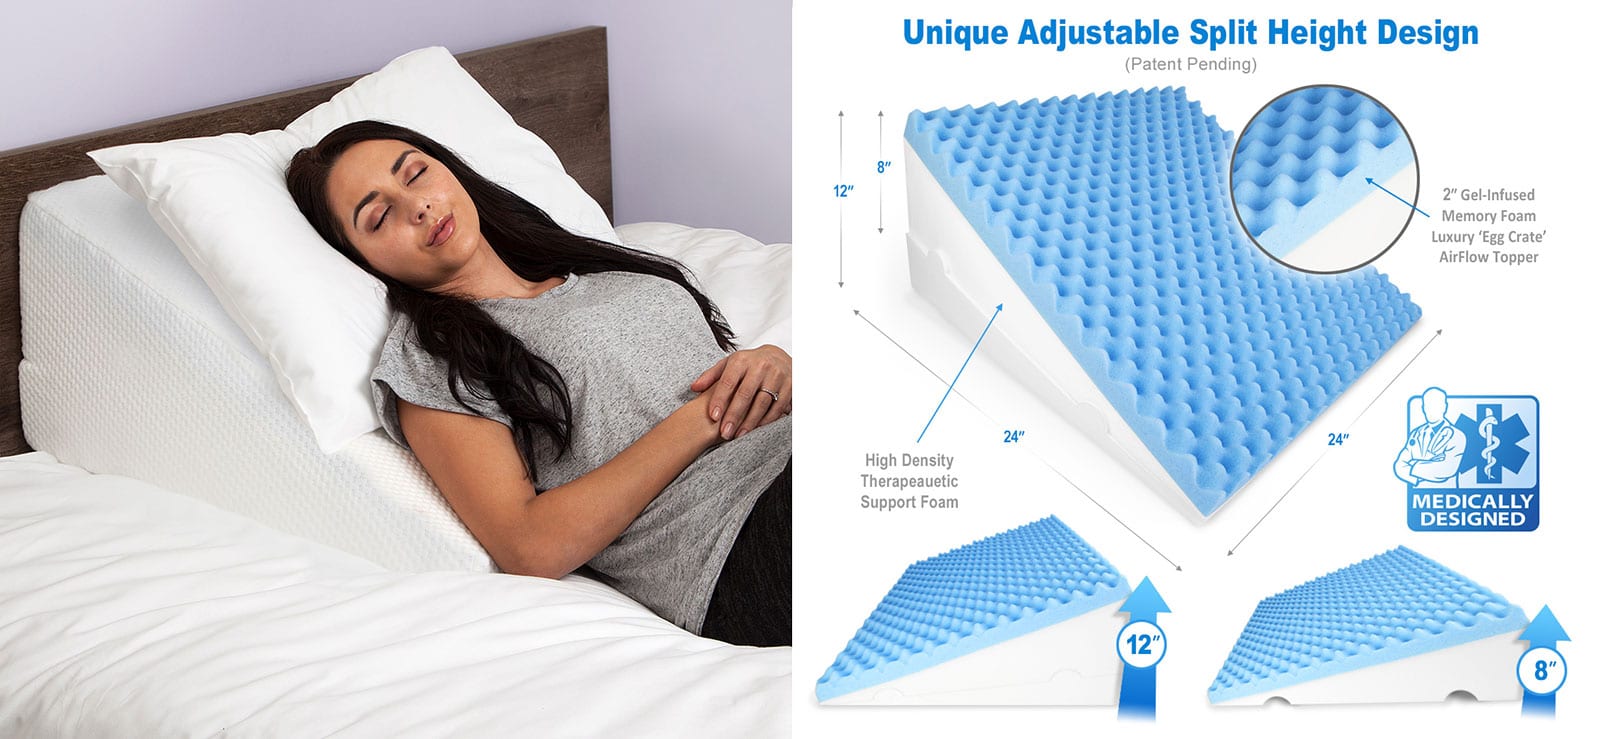 The Most Versatile Bolster Pillow - Zenesse Health